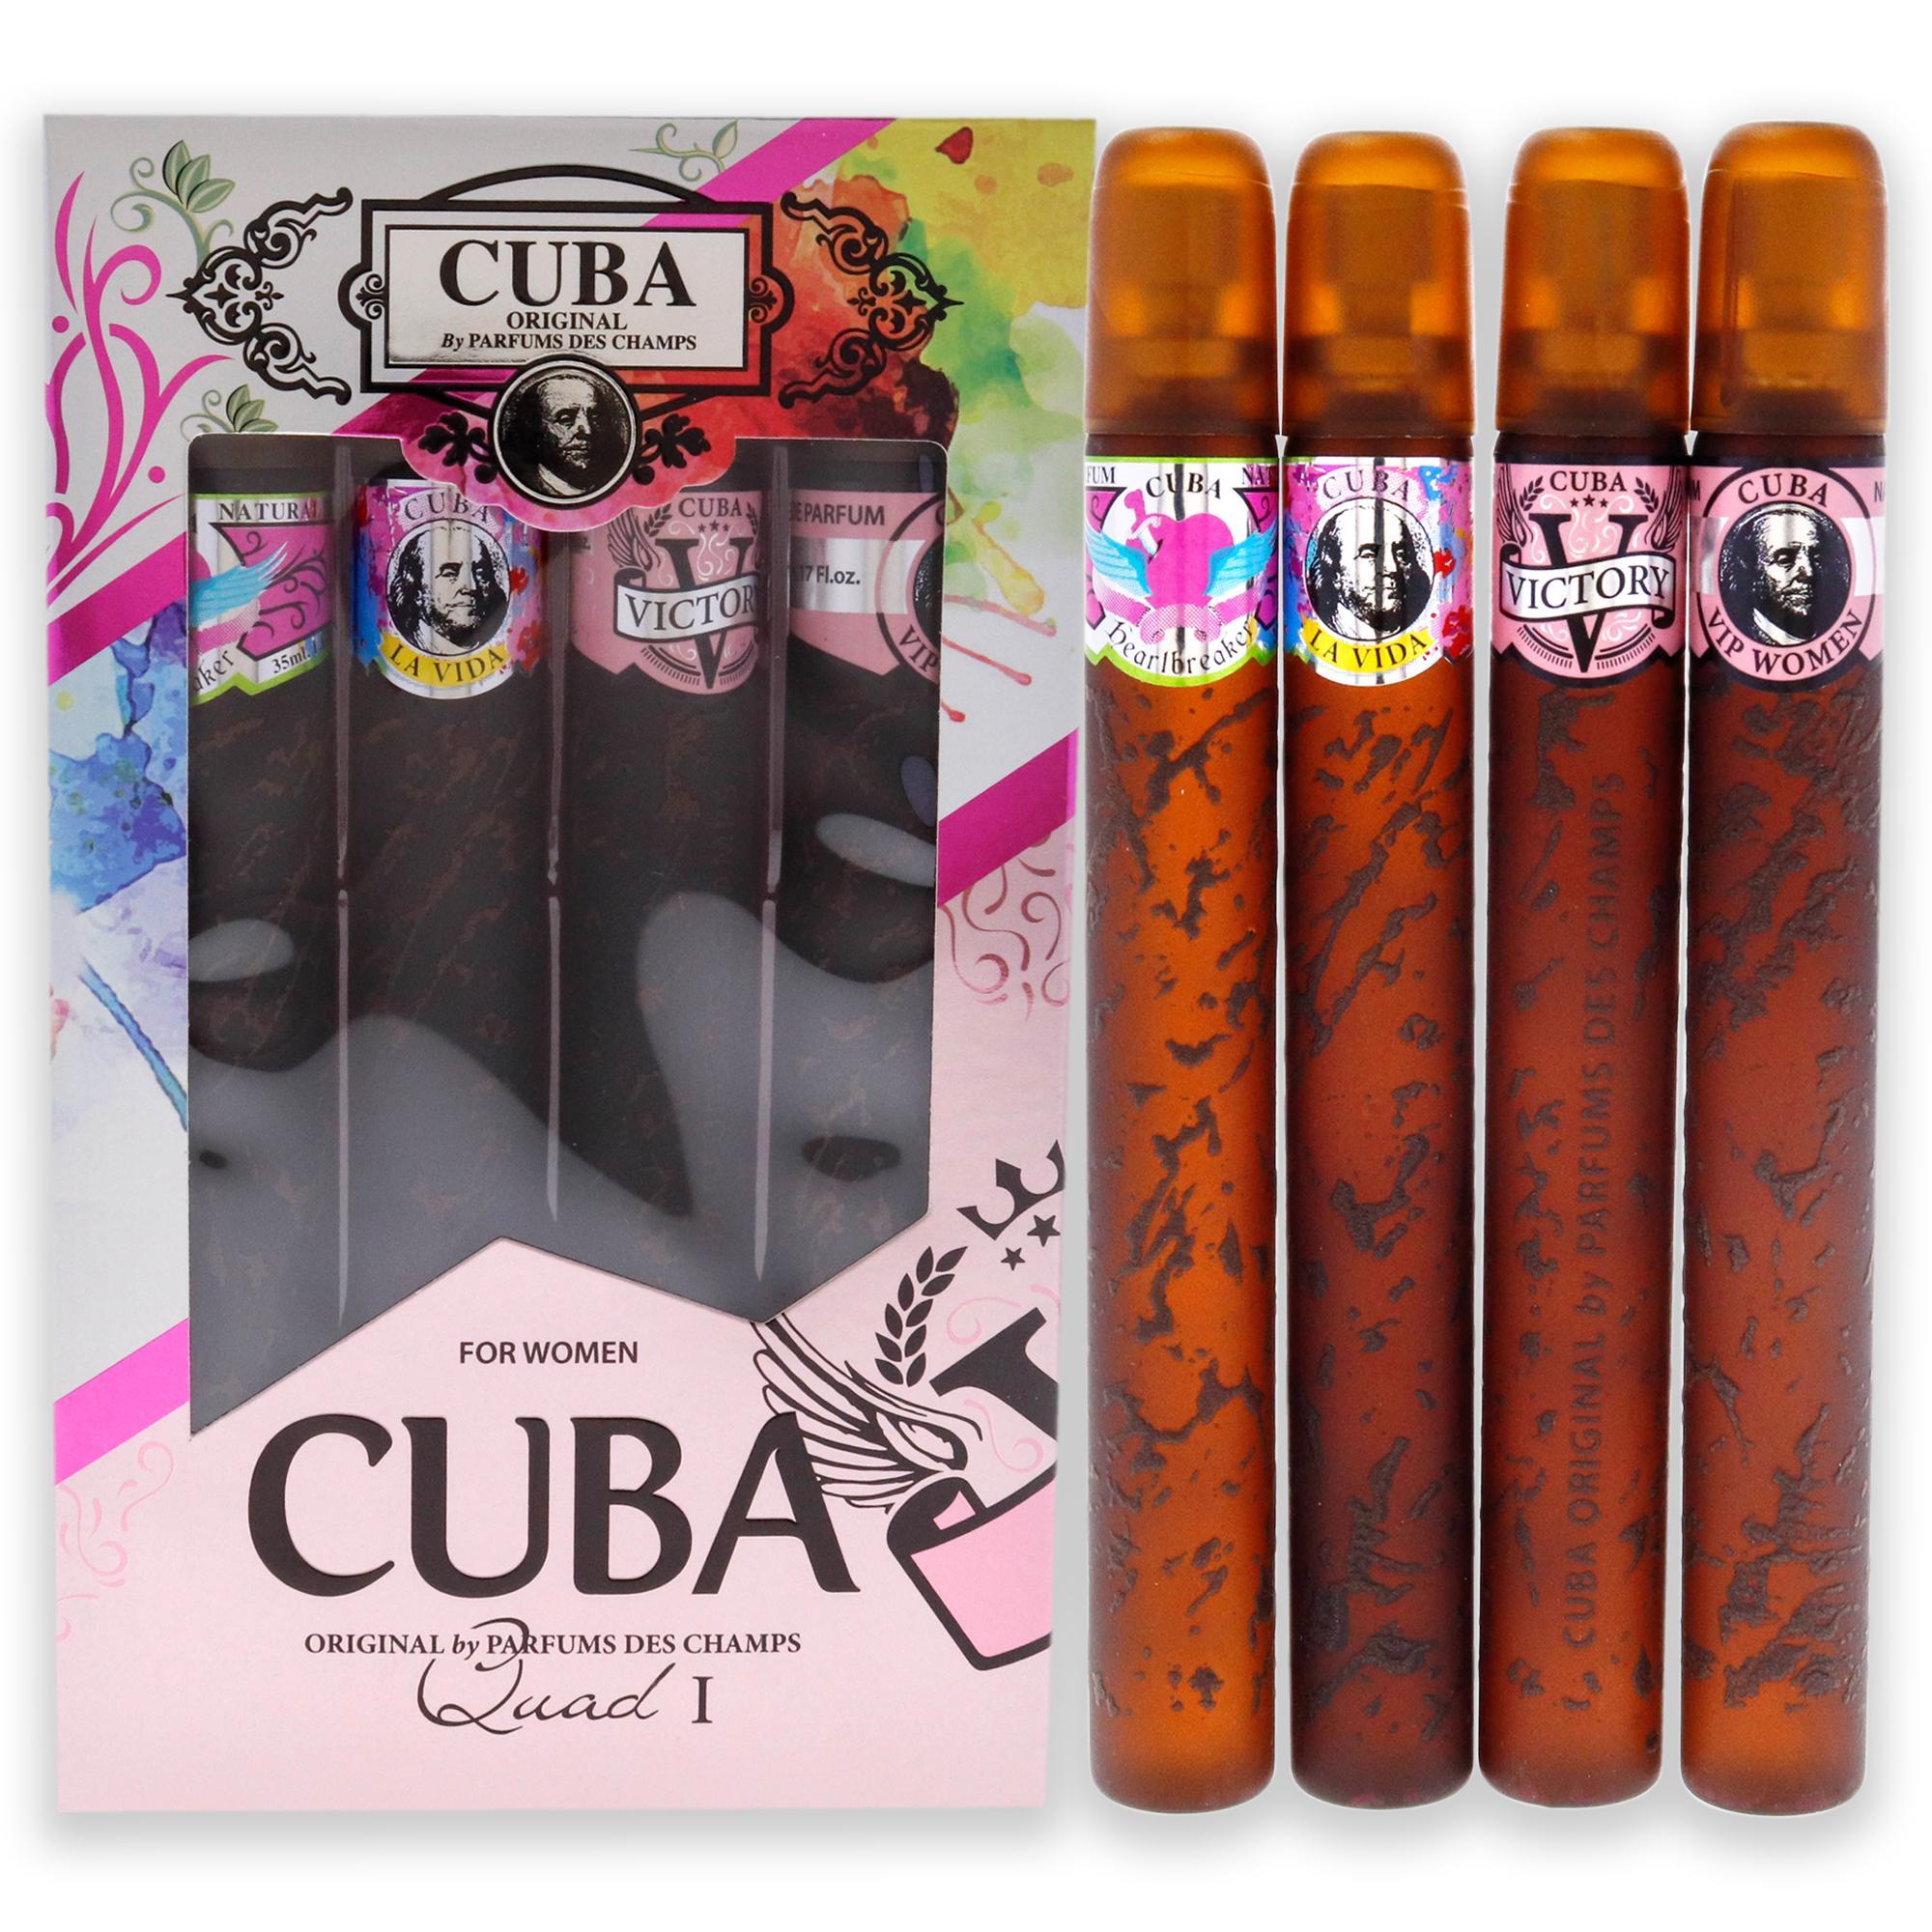 Cuba Quad I by Cuba for Women - 4 Pc Gift Set 1.17oz Cuba Heartbreak EDP Spray, 1.17oz Cuba La Vida EDP Spray, 1.17oz Cuba Victory EDP Spray, 1.17oz Cuba VIP EDP Spray